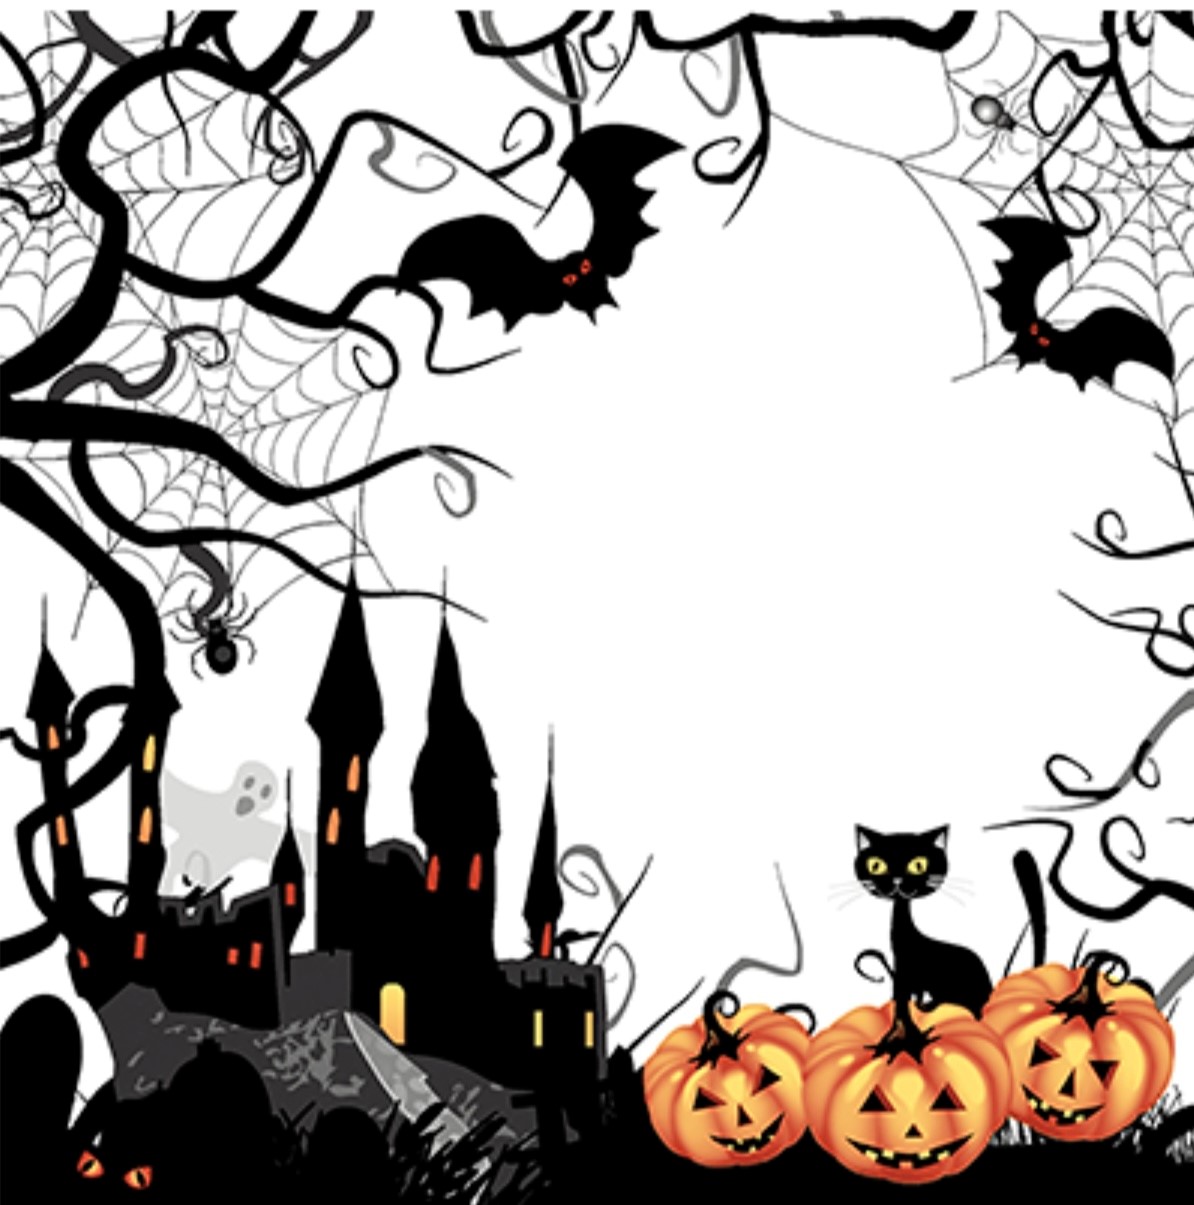 Servett Halloween Spookey